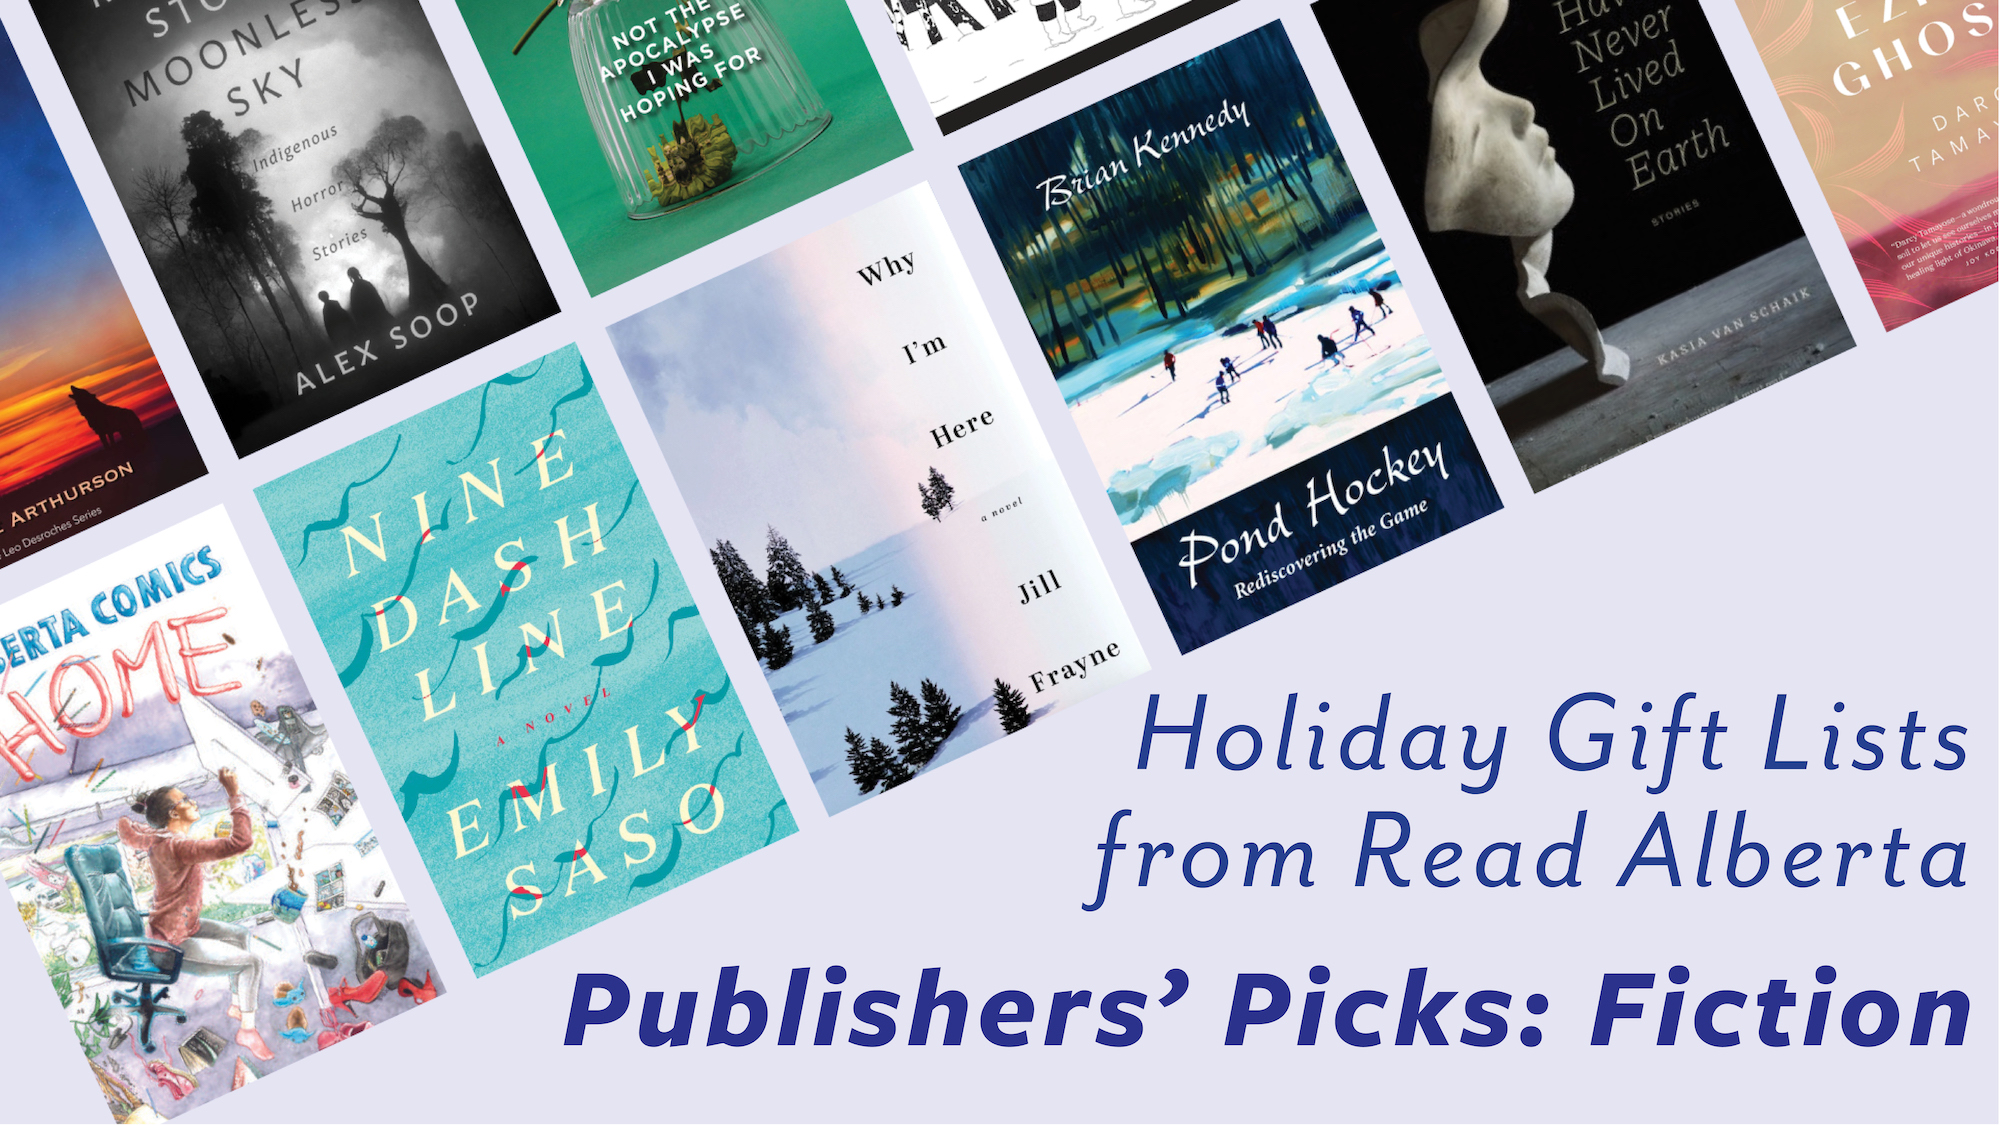 Publishers’ Picks: Fiction